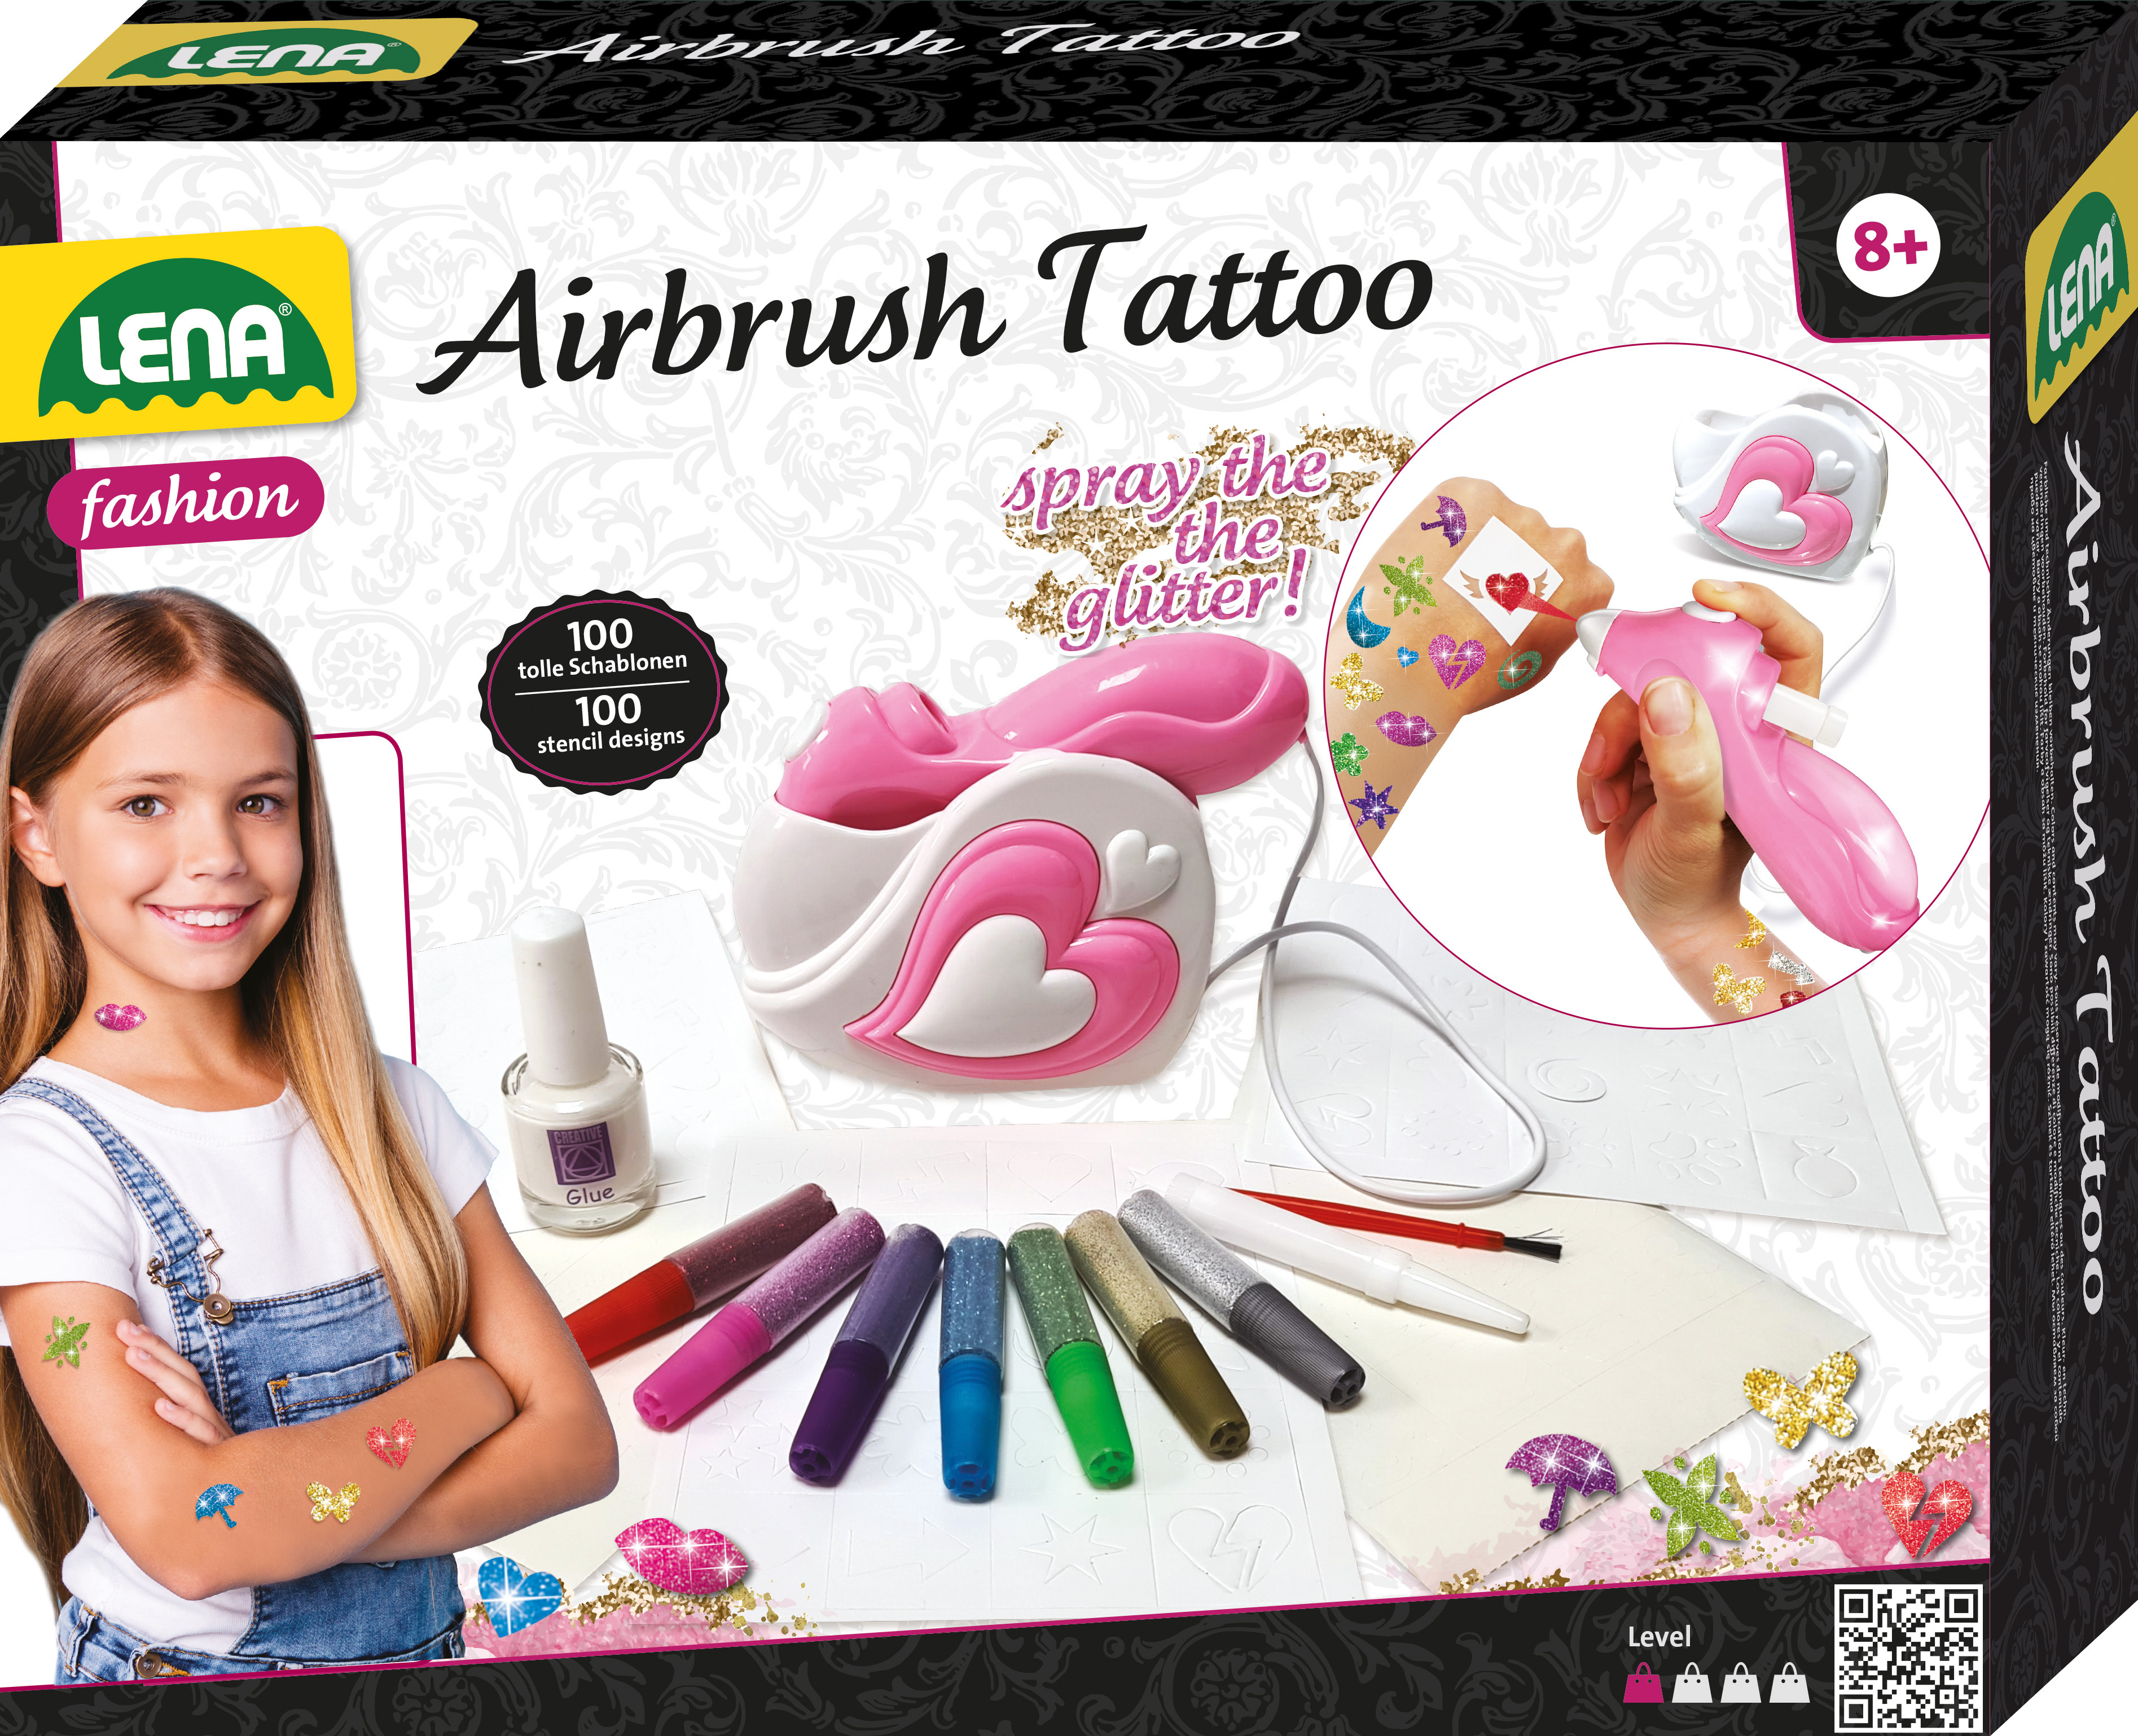 Lena Airbrush Tattoo